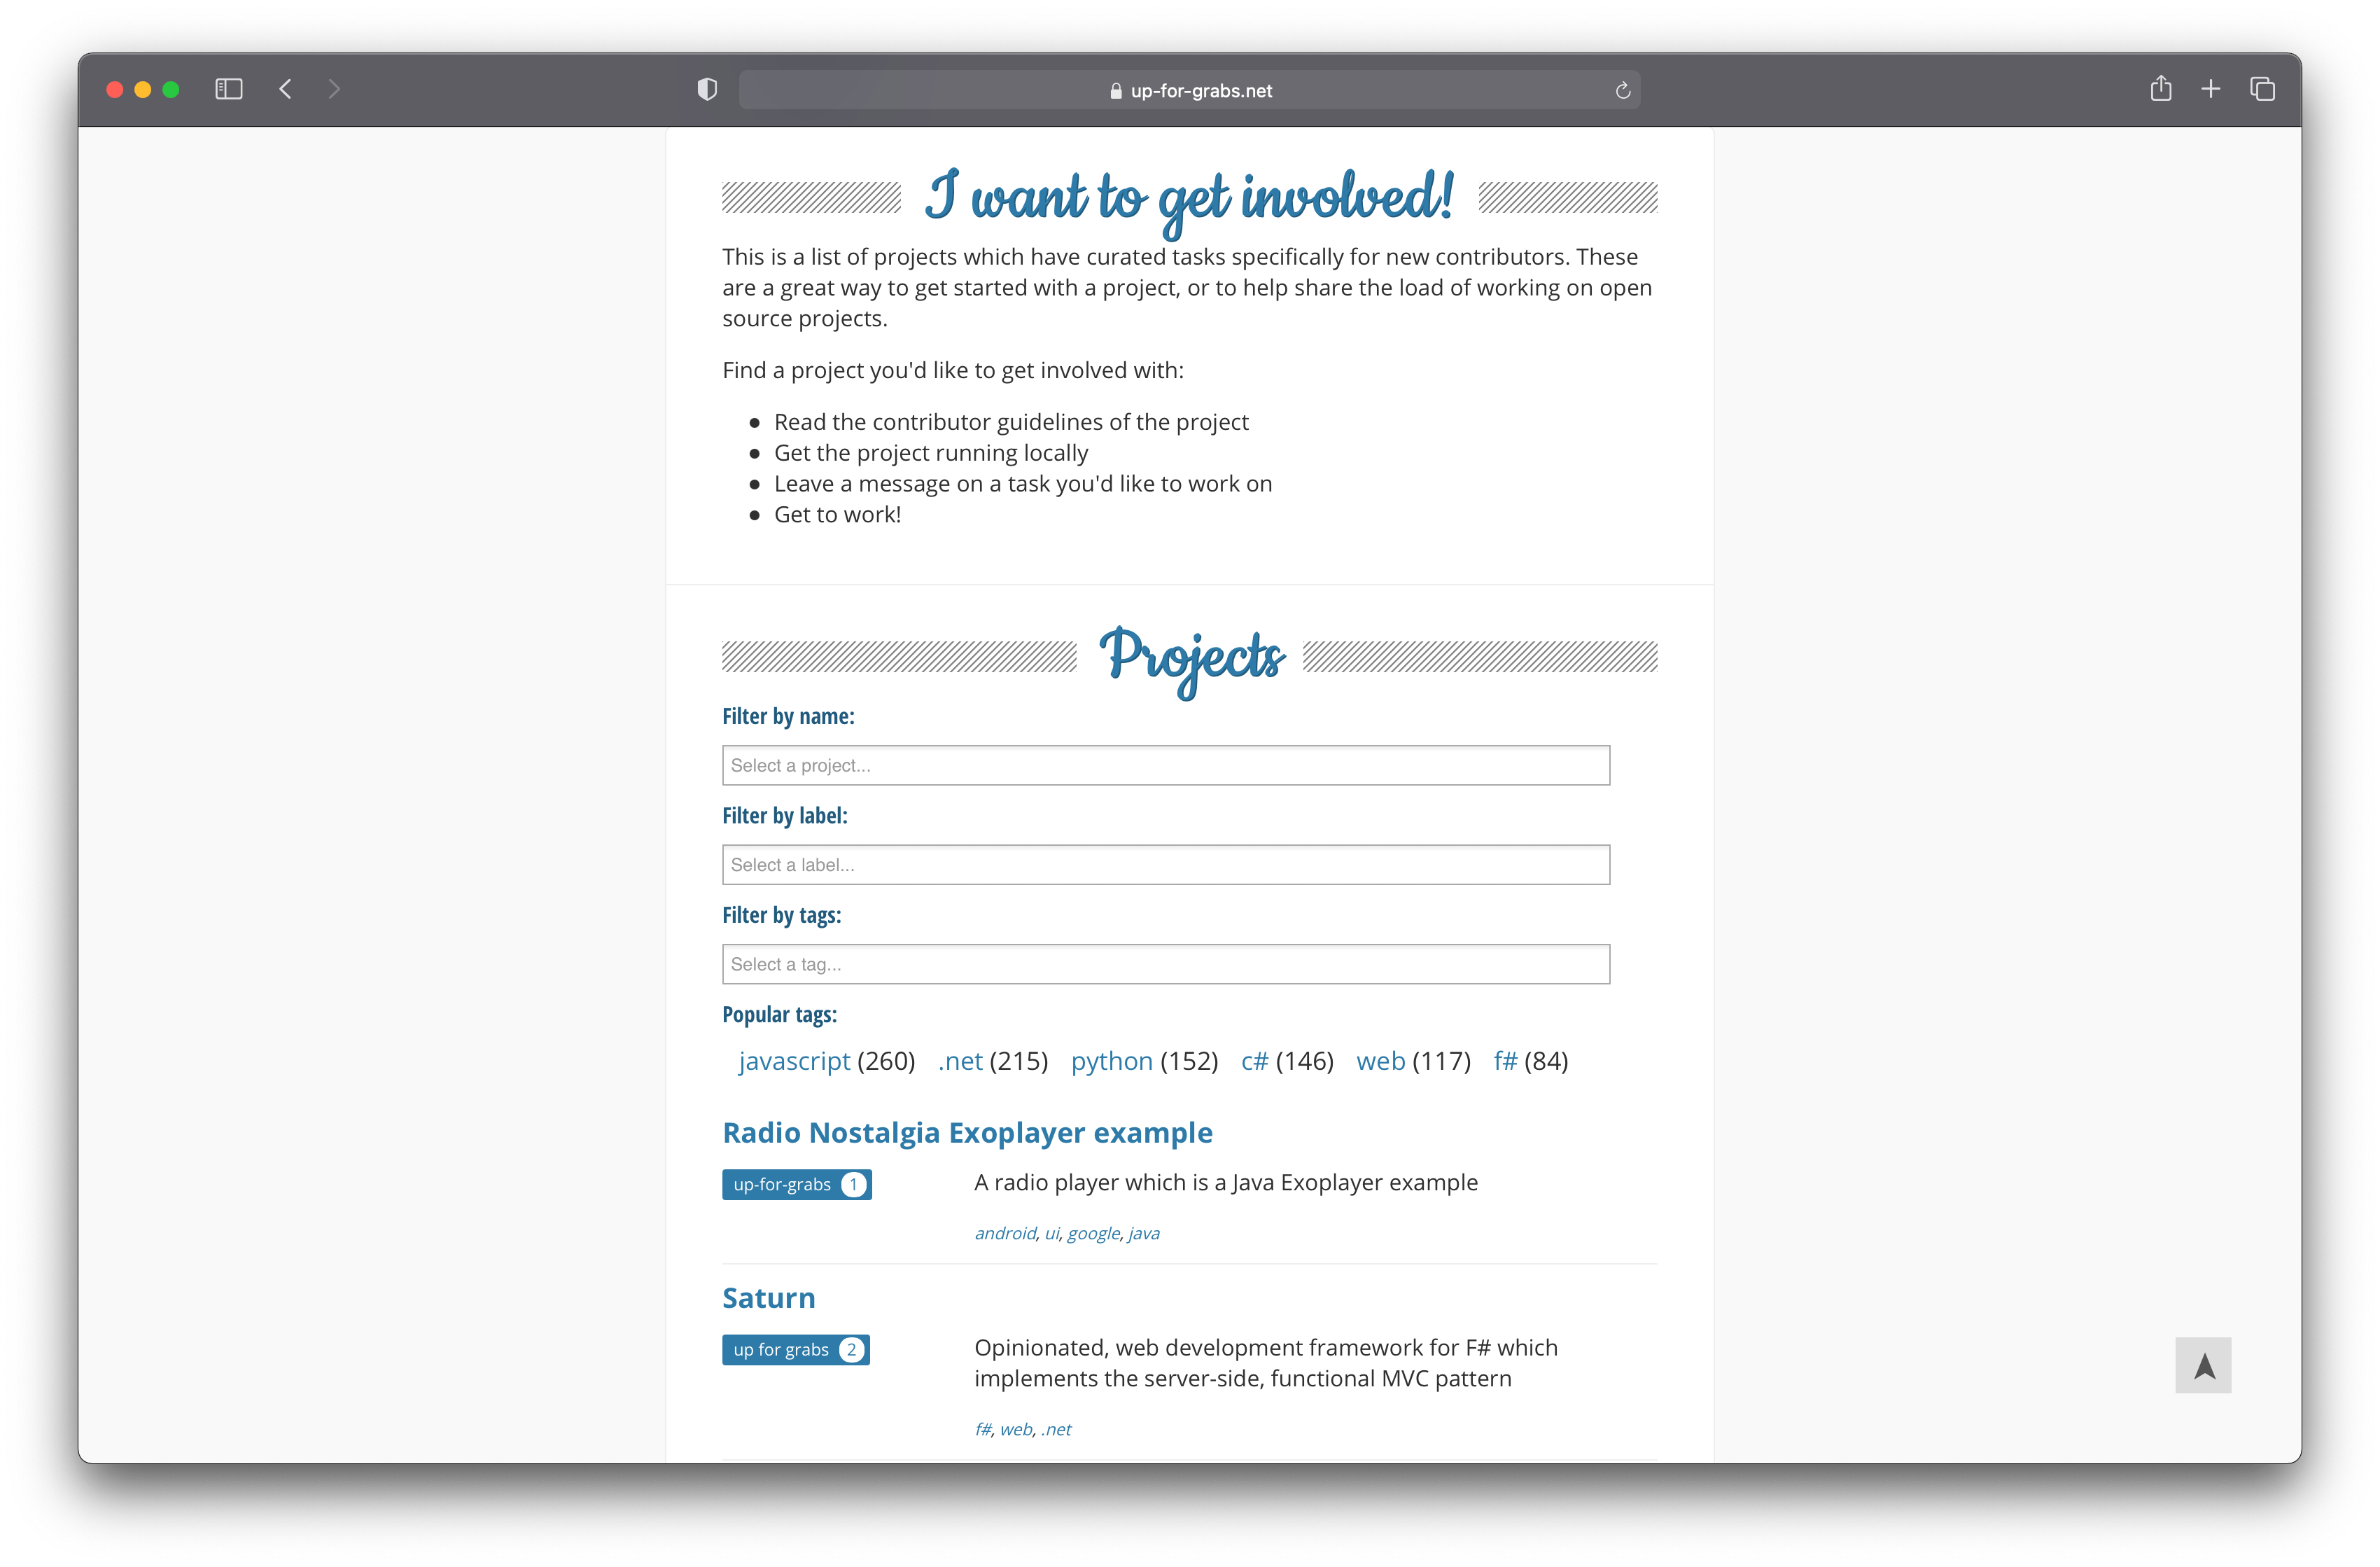 A screenshot of the Up-for-Grabs.net website